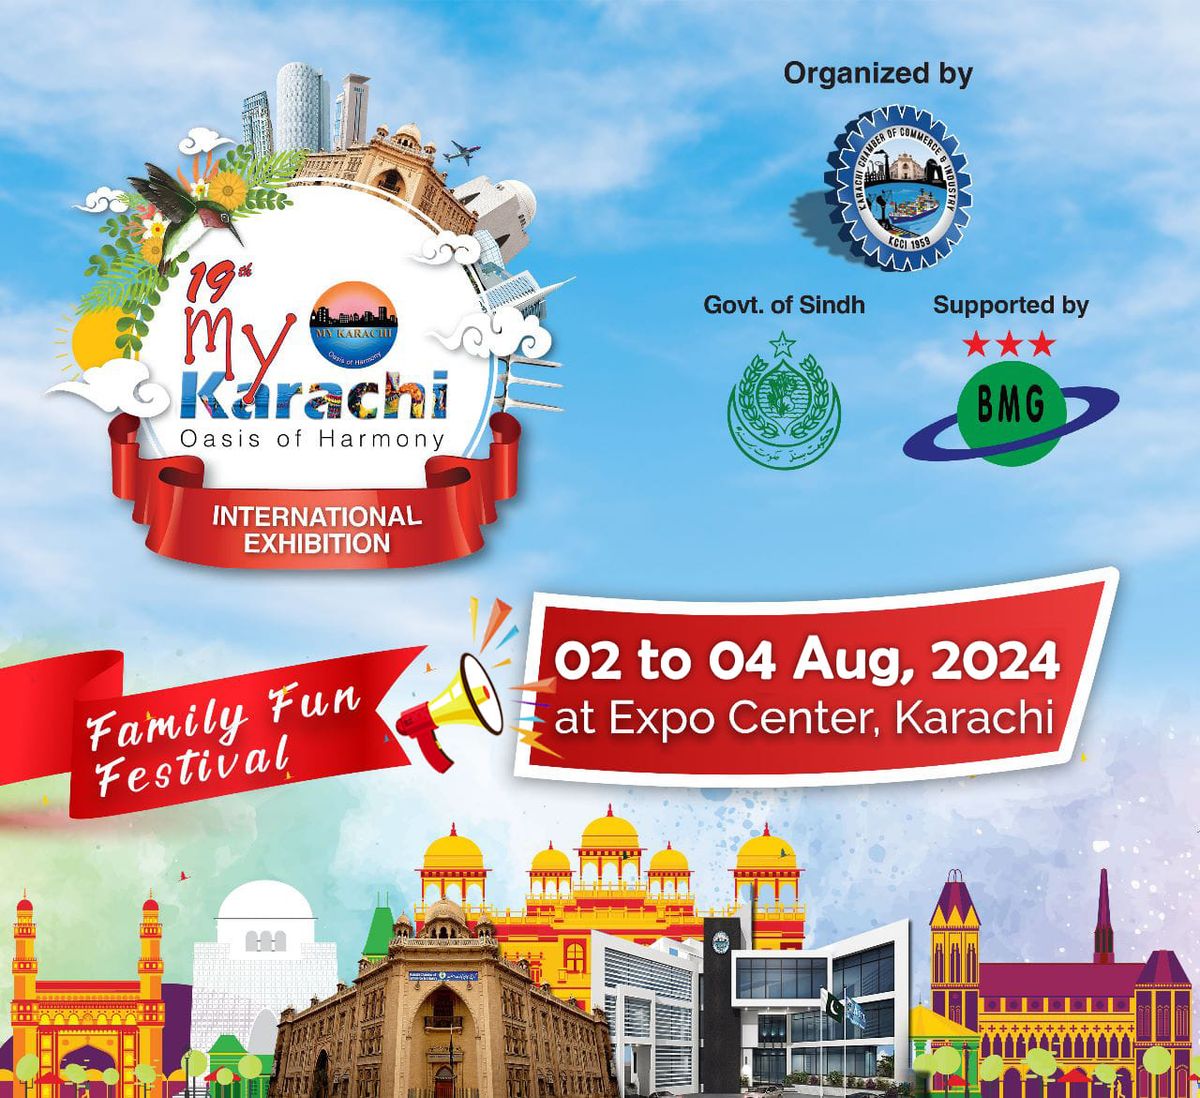 My Karachi - Oasis of Harmony Exhibition 